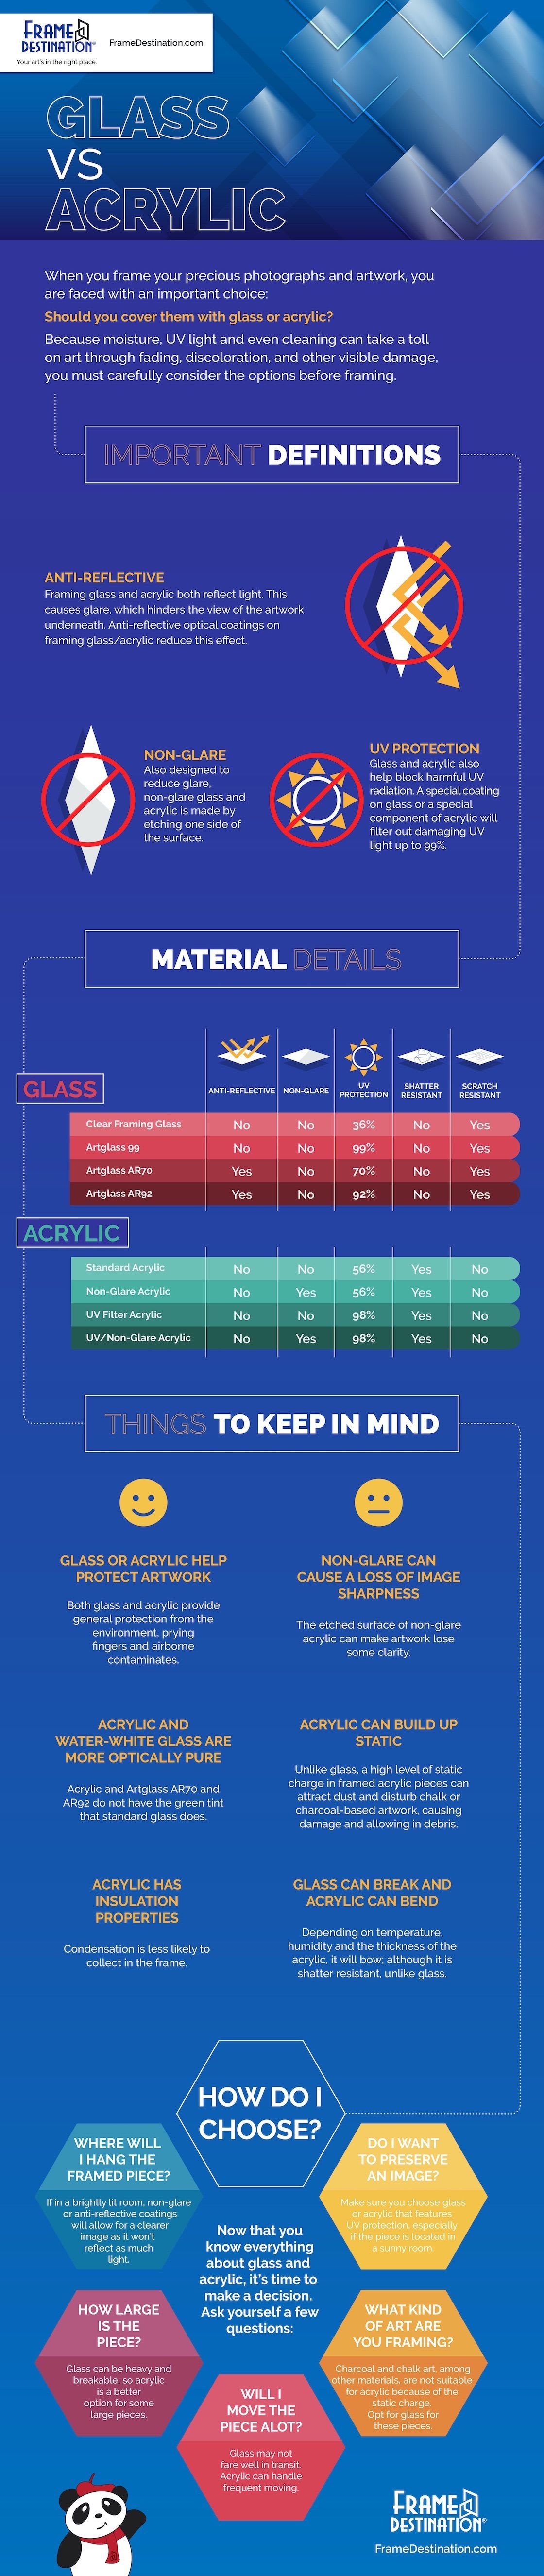 glass-vs-actrylic-infographic